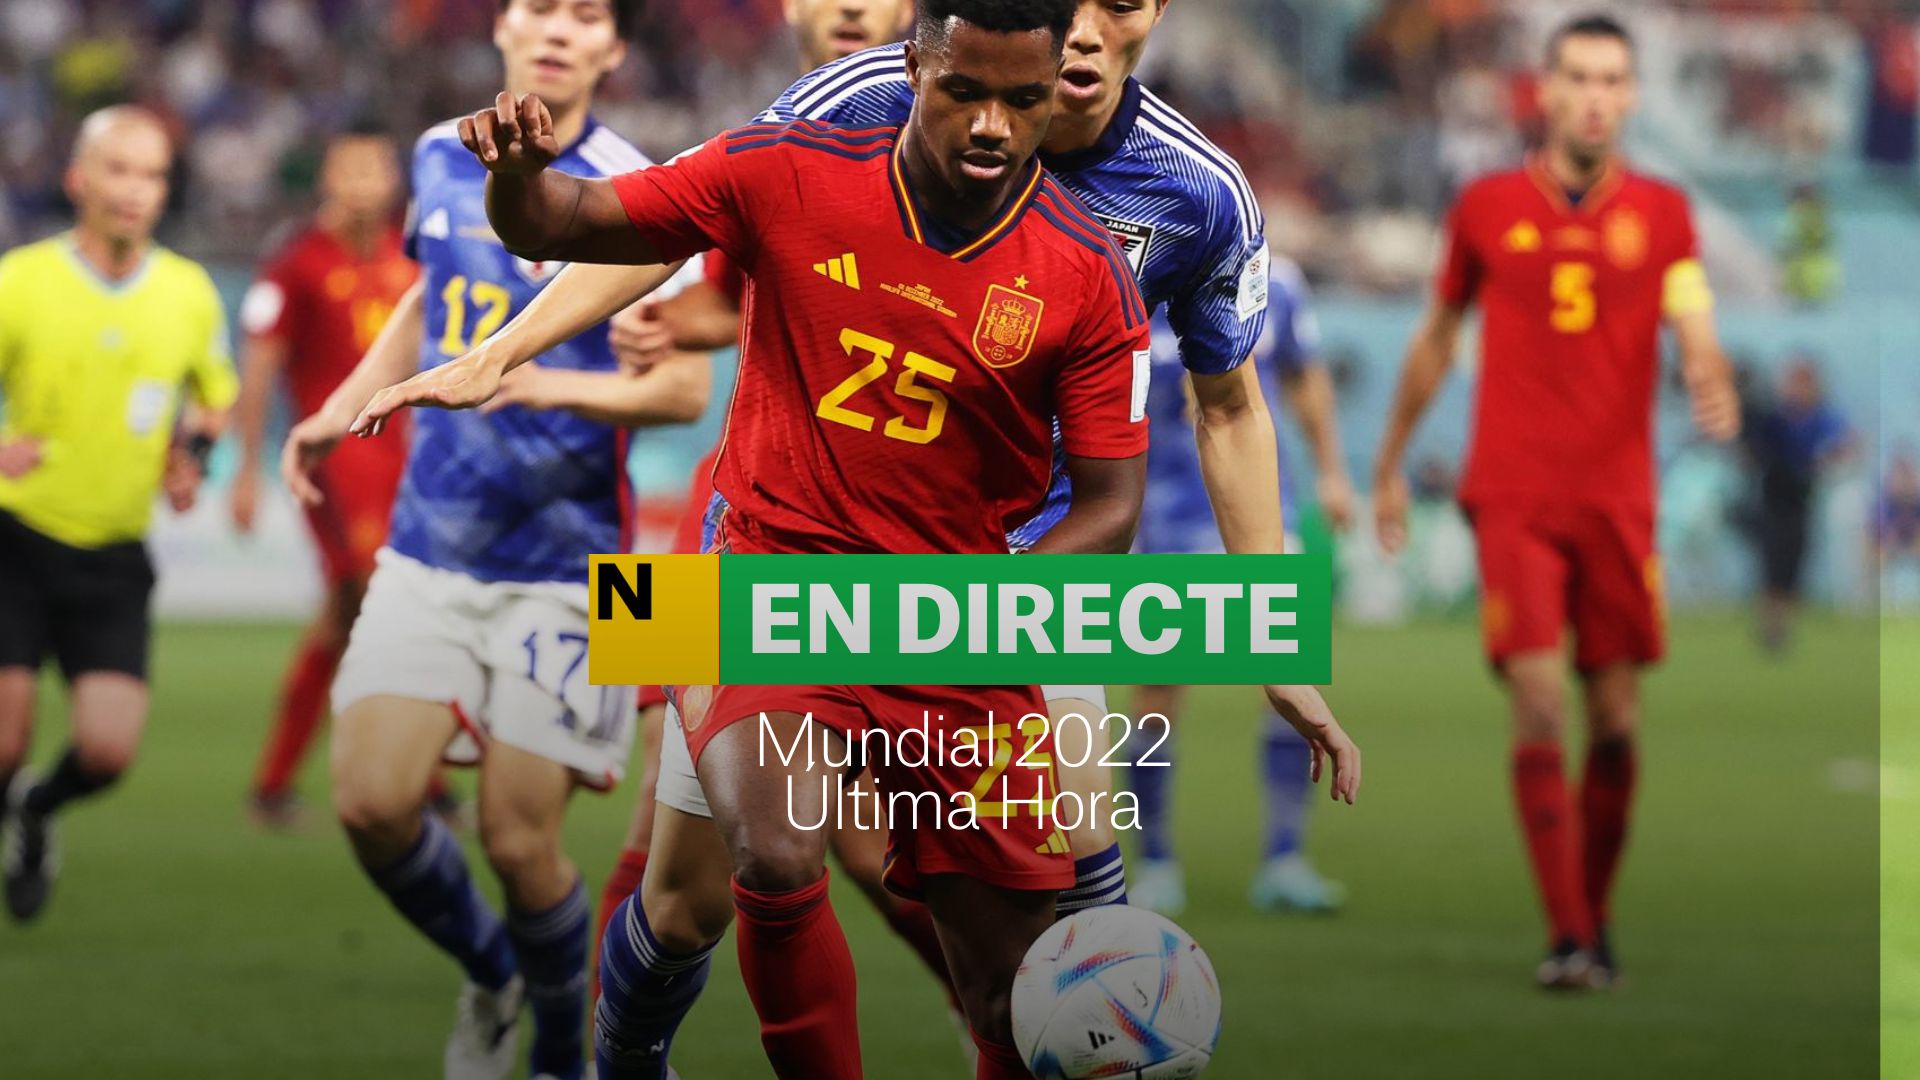 Mundial Qatar 2022, DIRECTE | Última hora: Espanya contra Marroc, Cristiano Ronaldo, Portugal